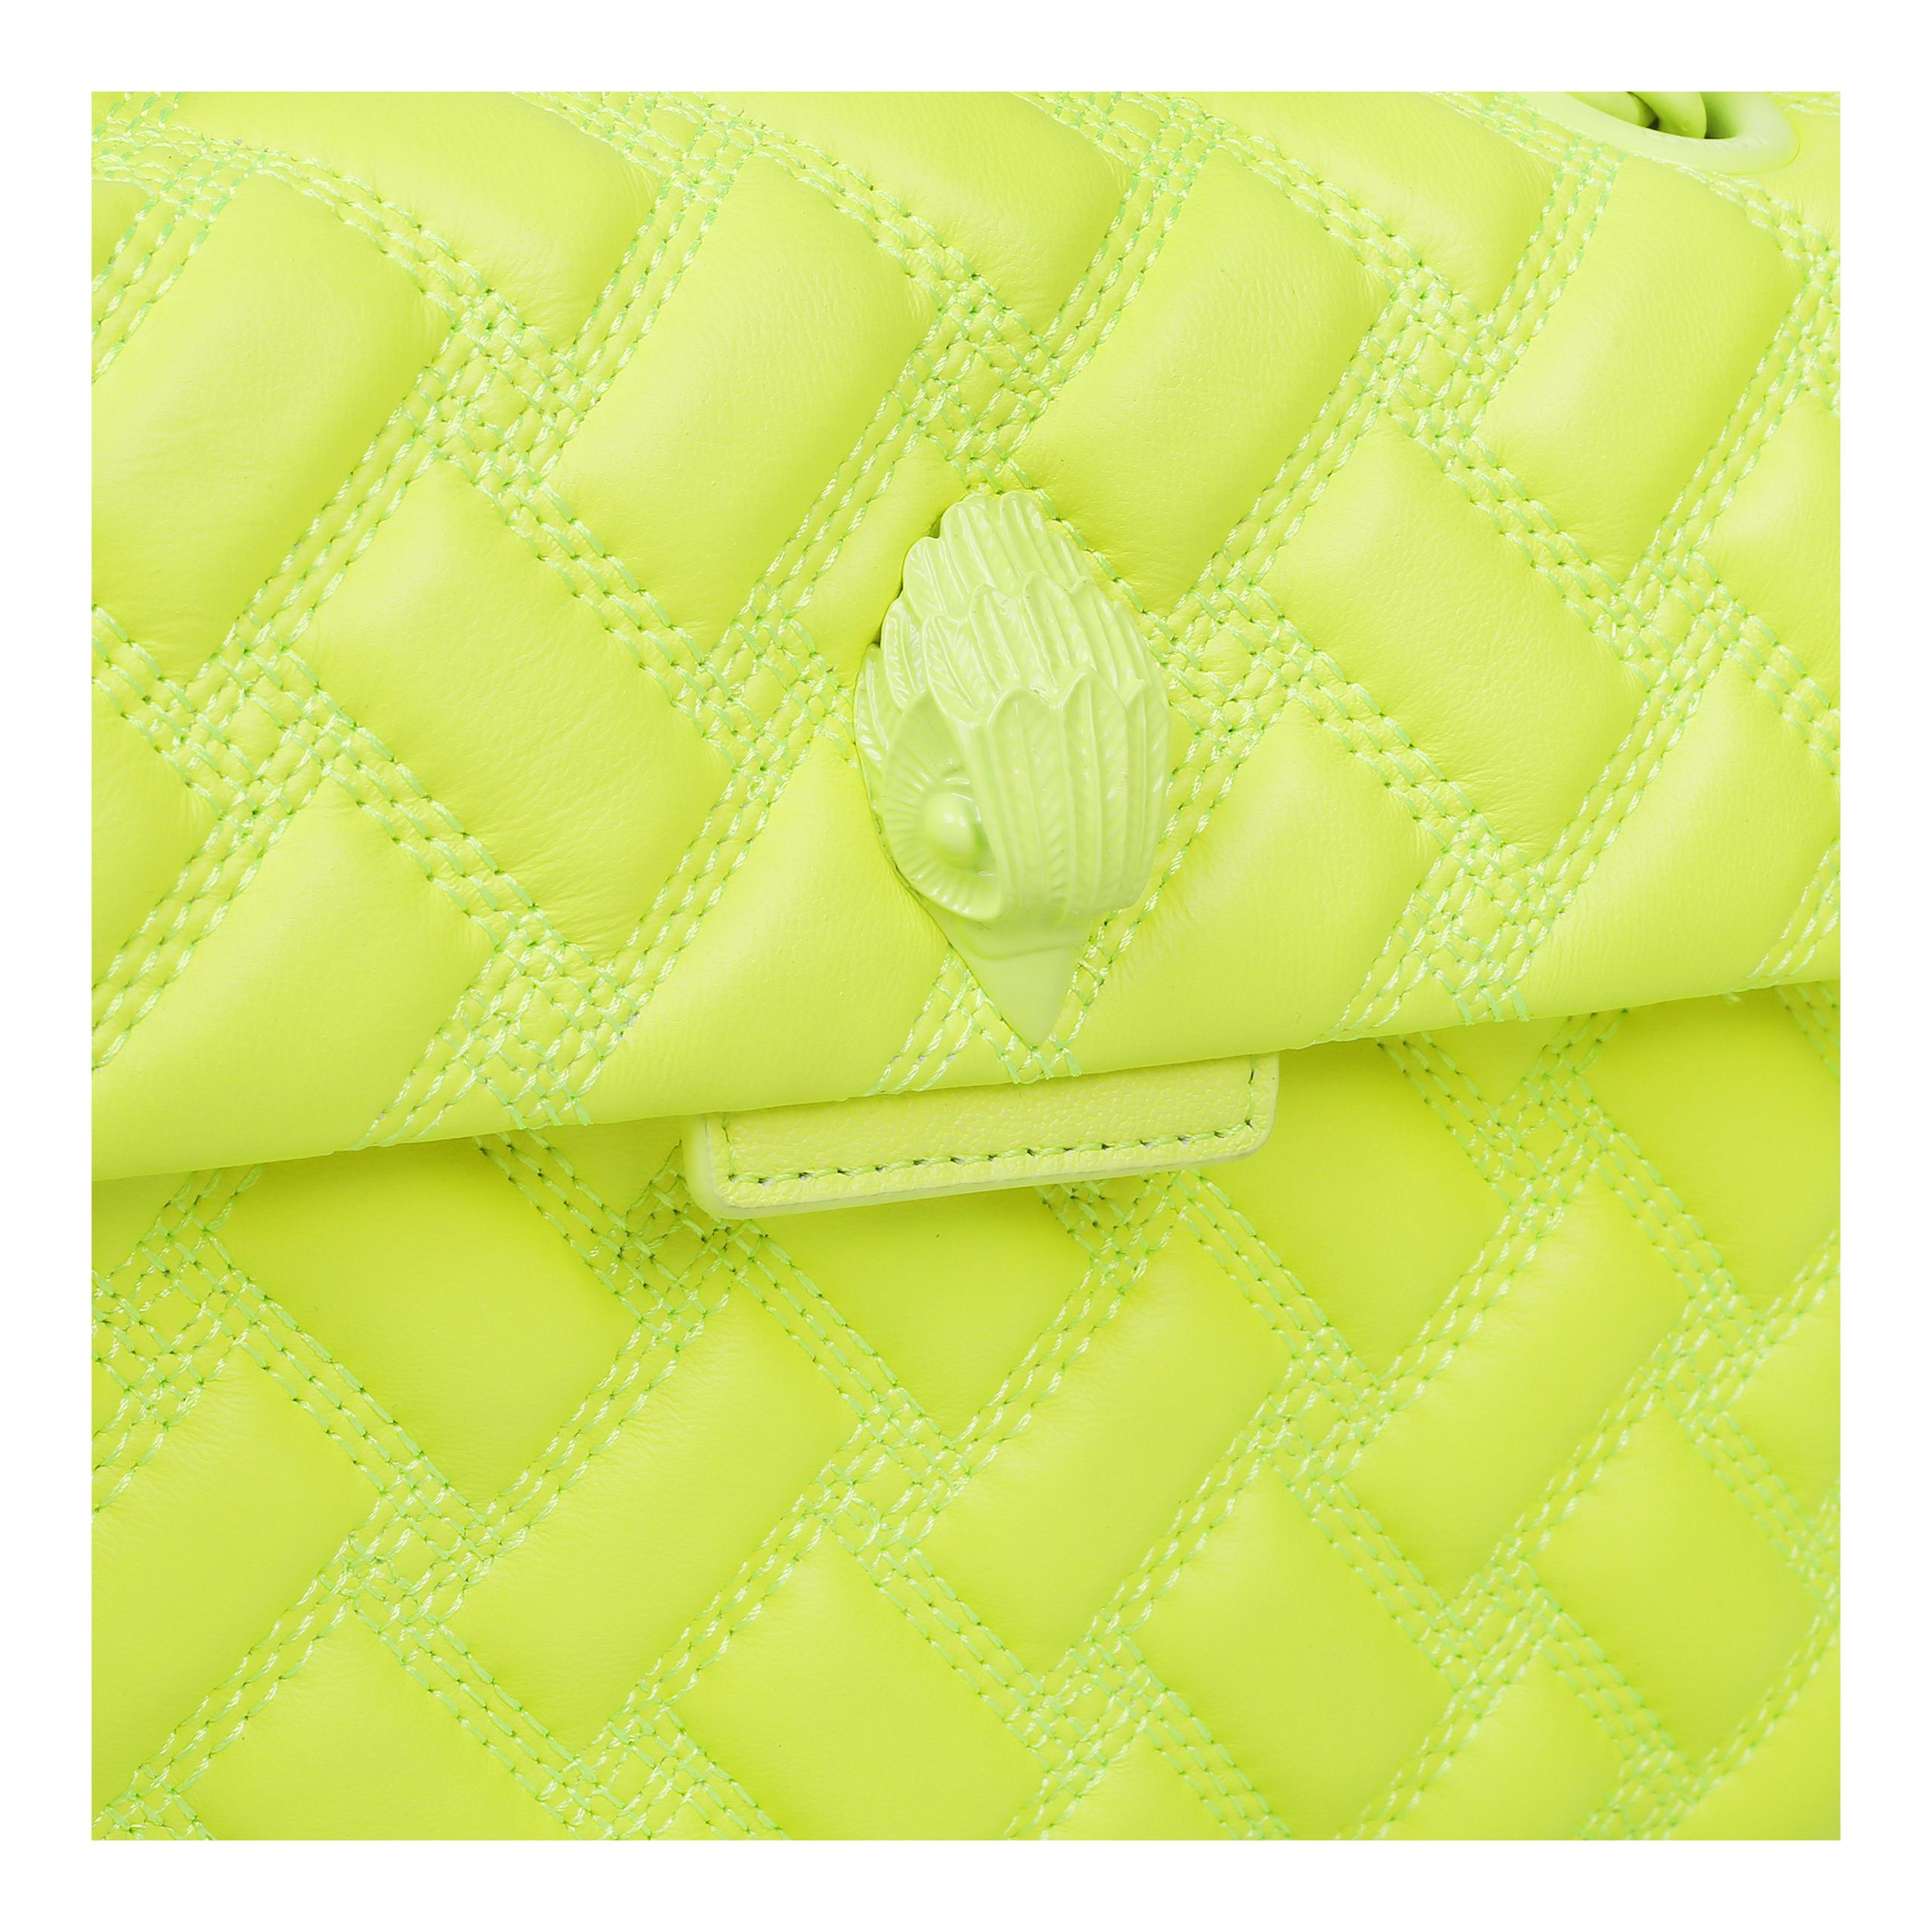 KENSINGTON BAG DRENCH Neon Yellow Cross Body Drench Bag by KURT GEIGER ...